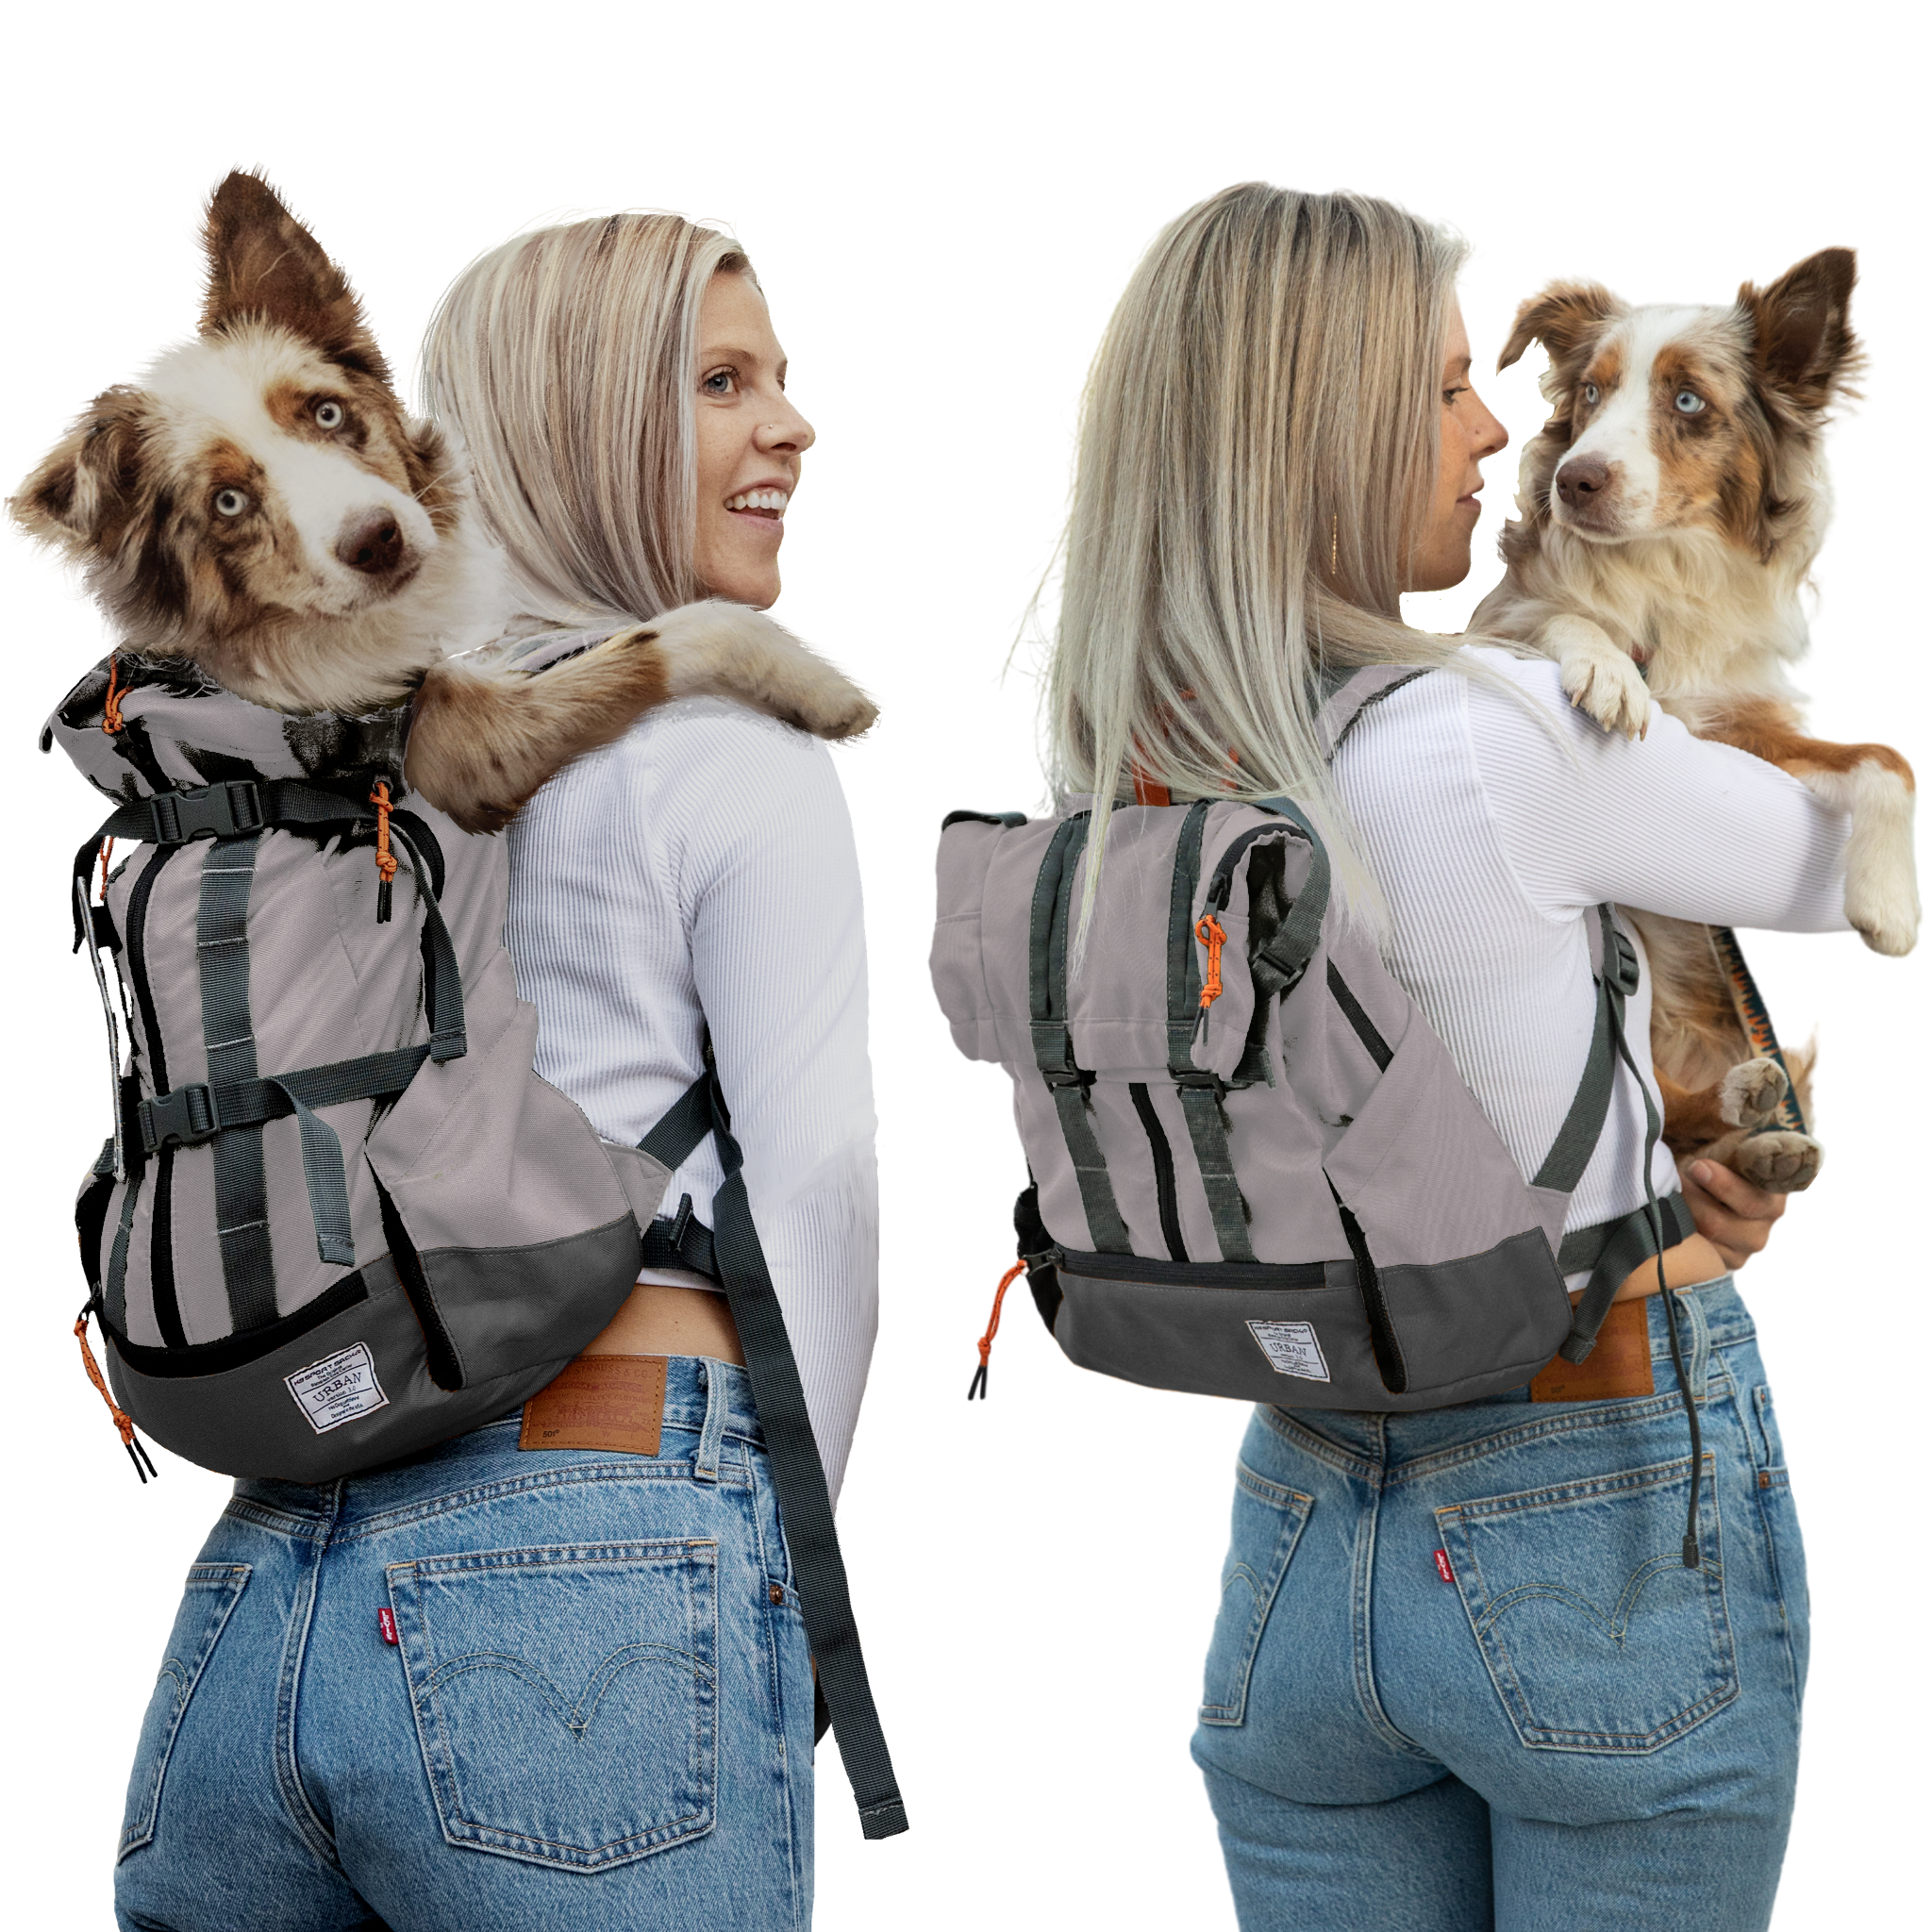 Mobile Dog Gear Week Away Personalized Dog Bag, Black